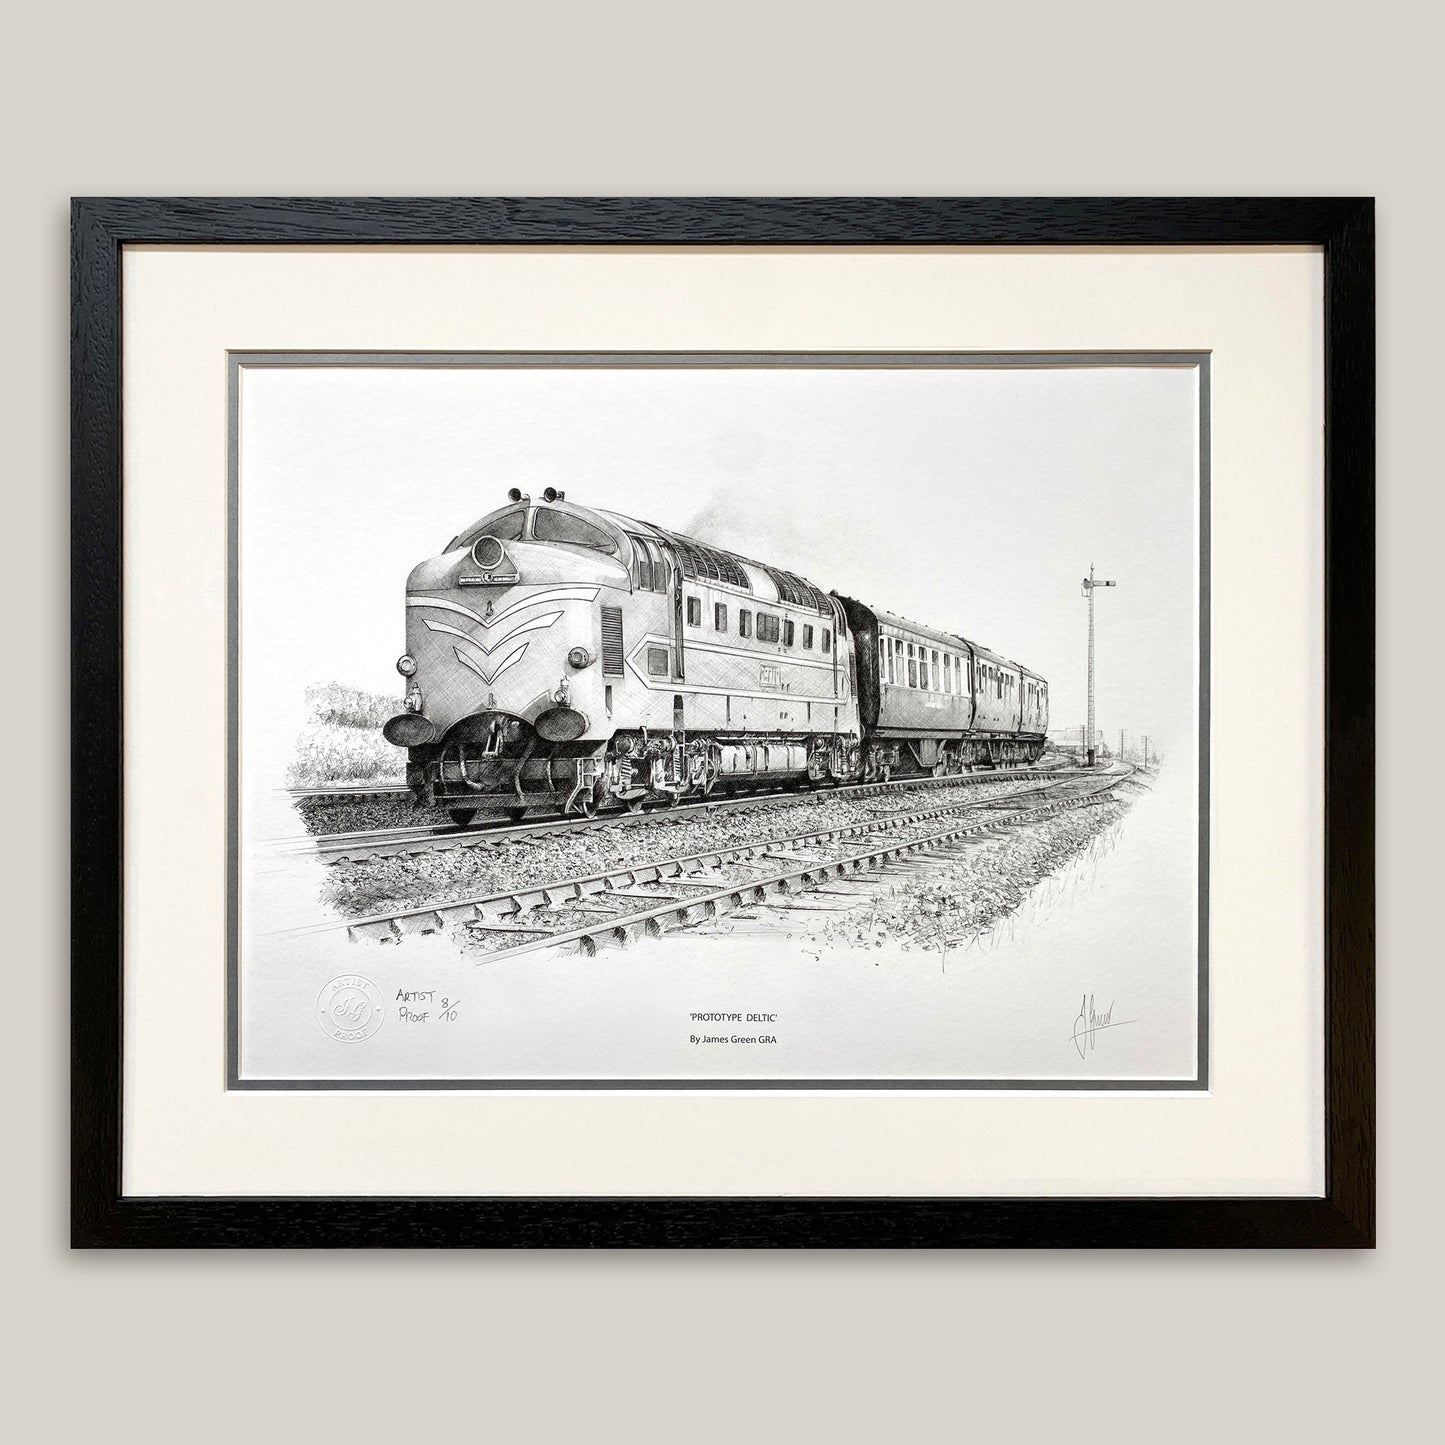 Framed print of DP1 train 